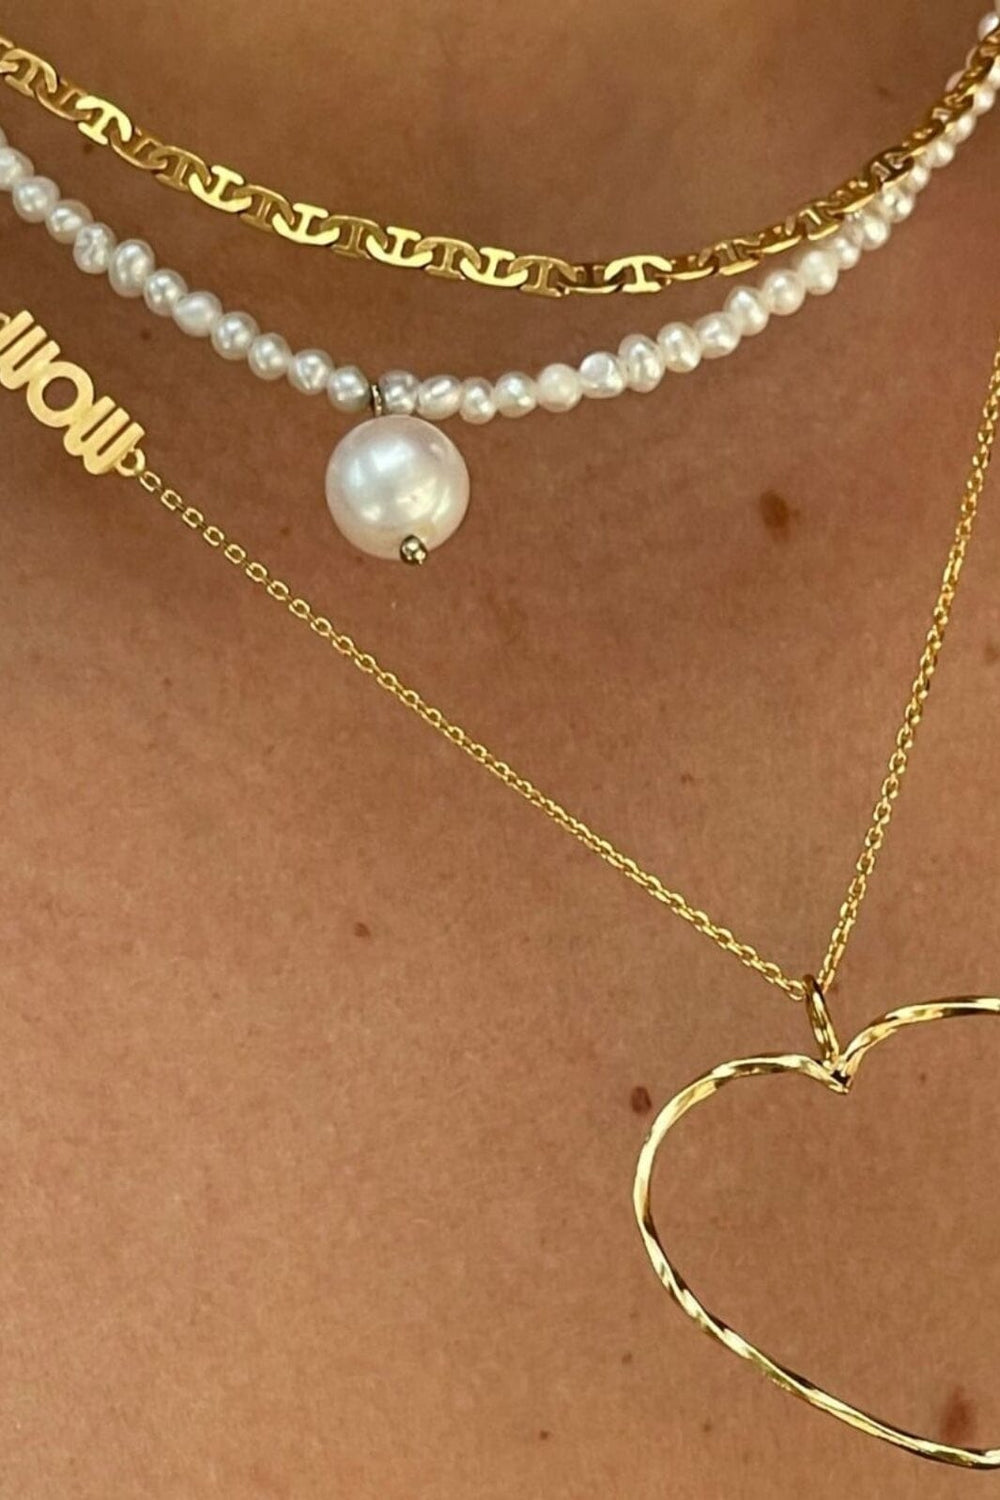 Stine A - Heavenly Pearl Dream Necklace Gold - Classy - 2045-02-Os Halskæder 